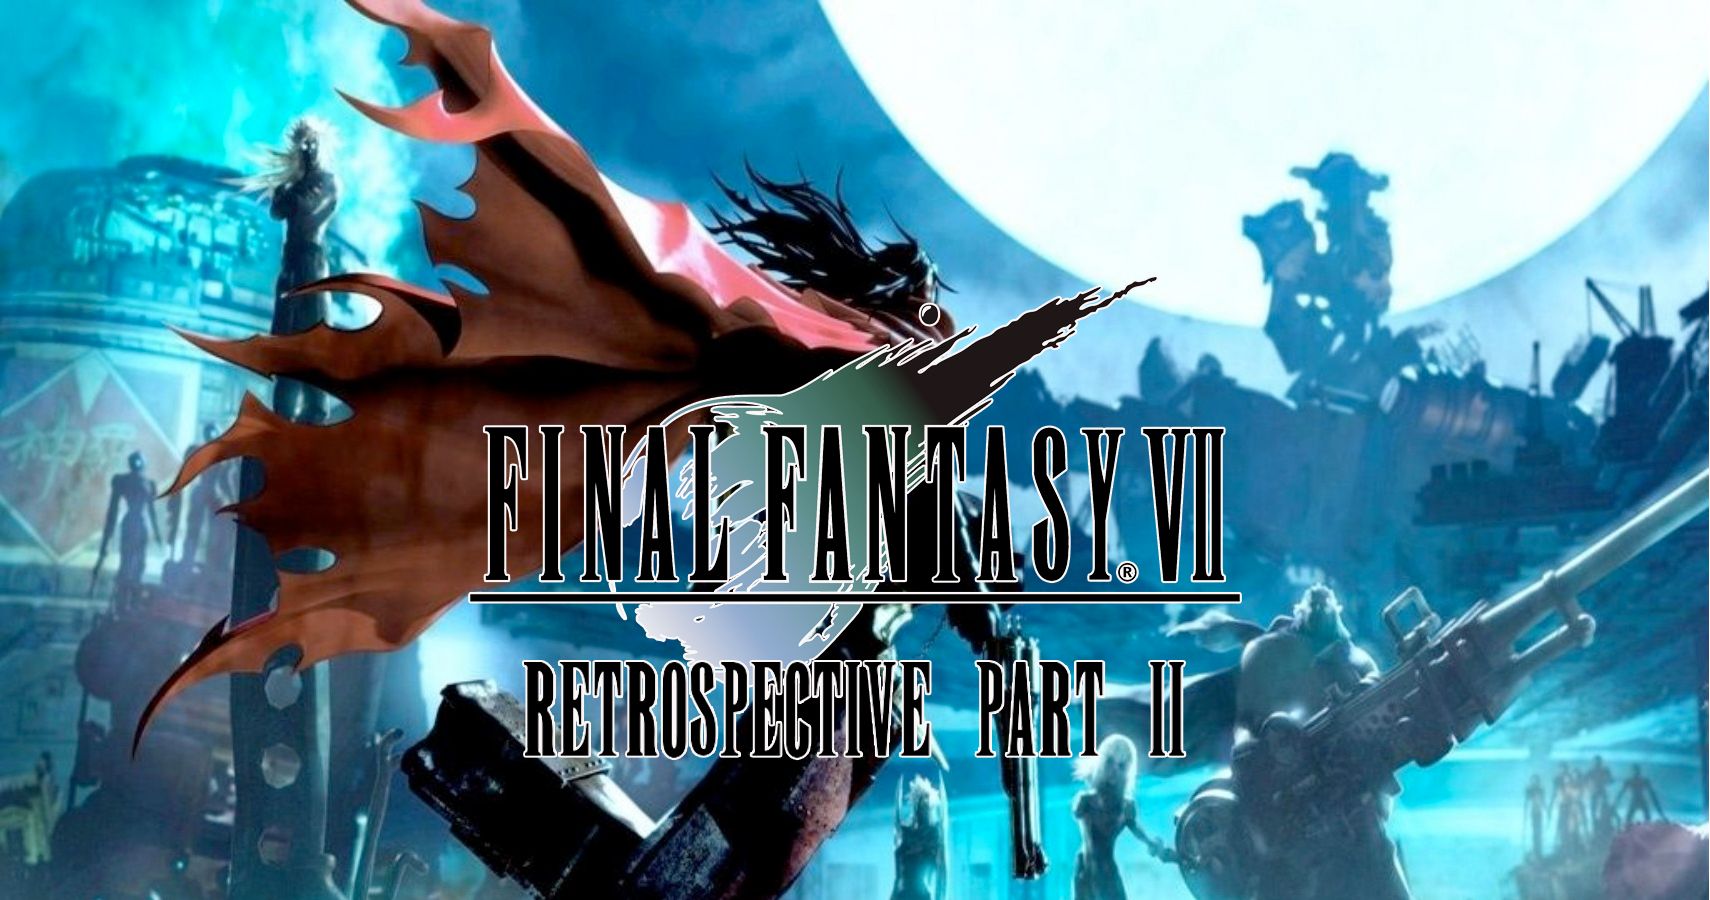 final fantasy 7 hd remake in parts